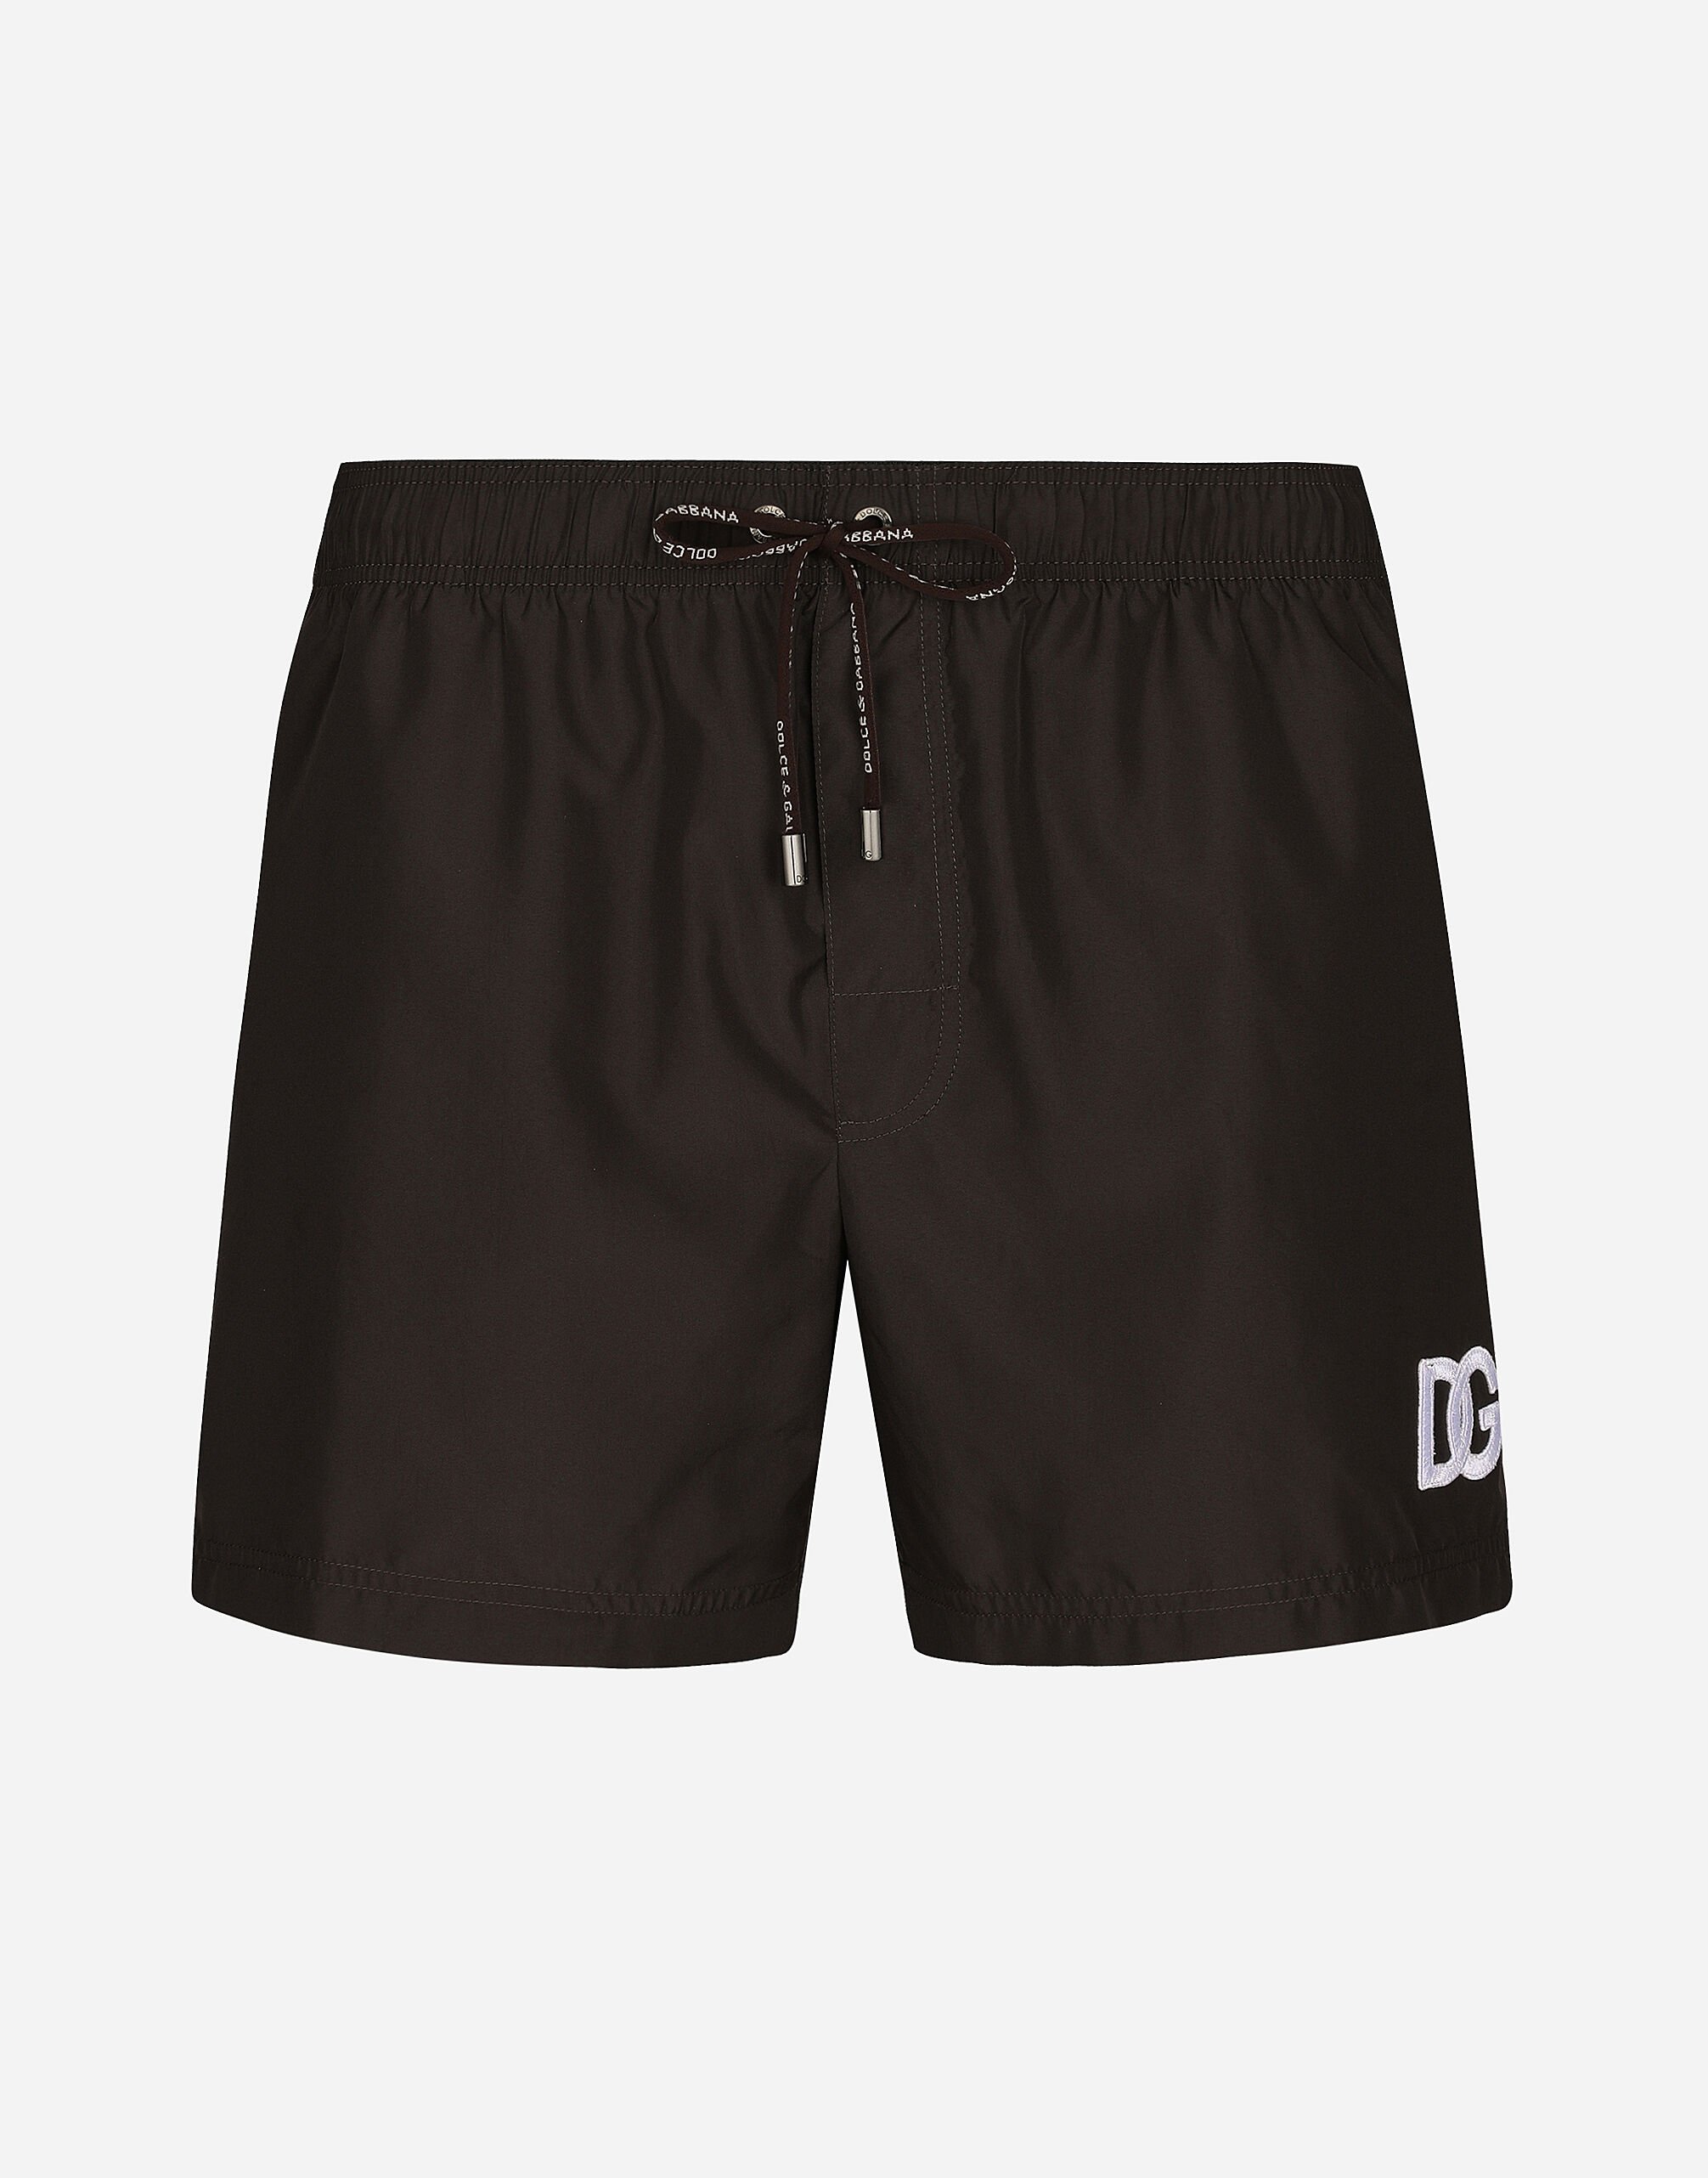 Dolce & Gabbana Short swim trunks with DG logo patch Print M4A13TISMHF